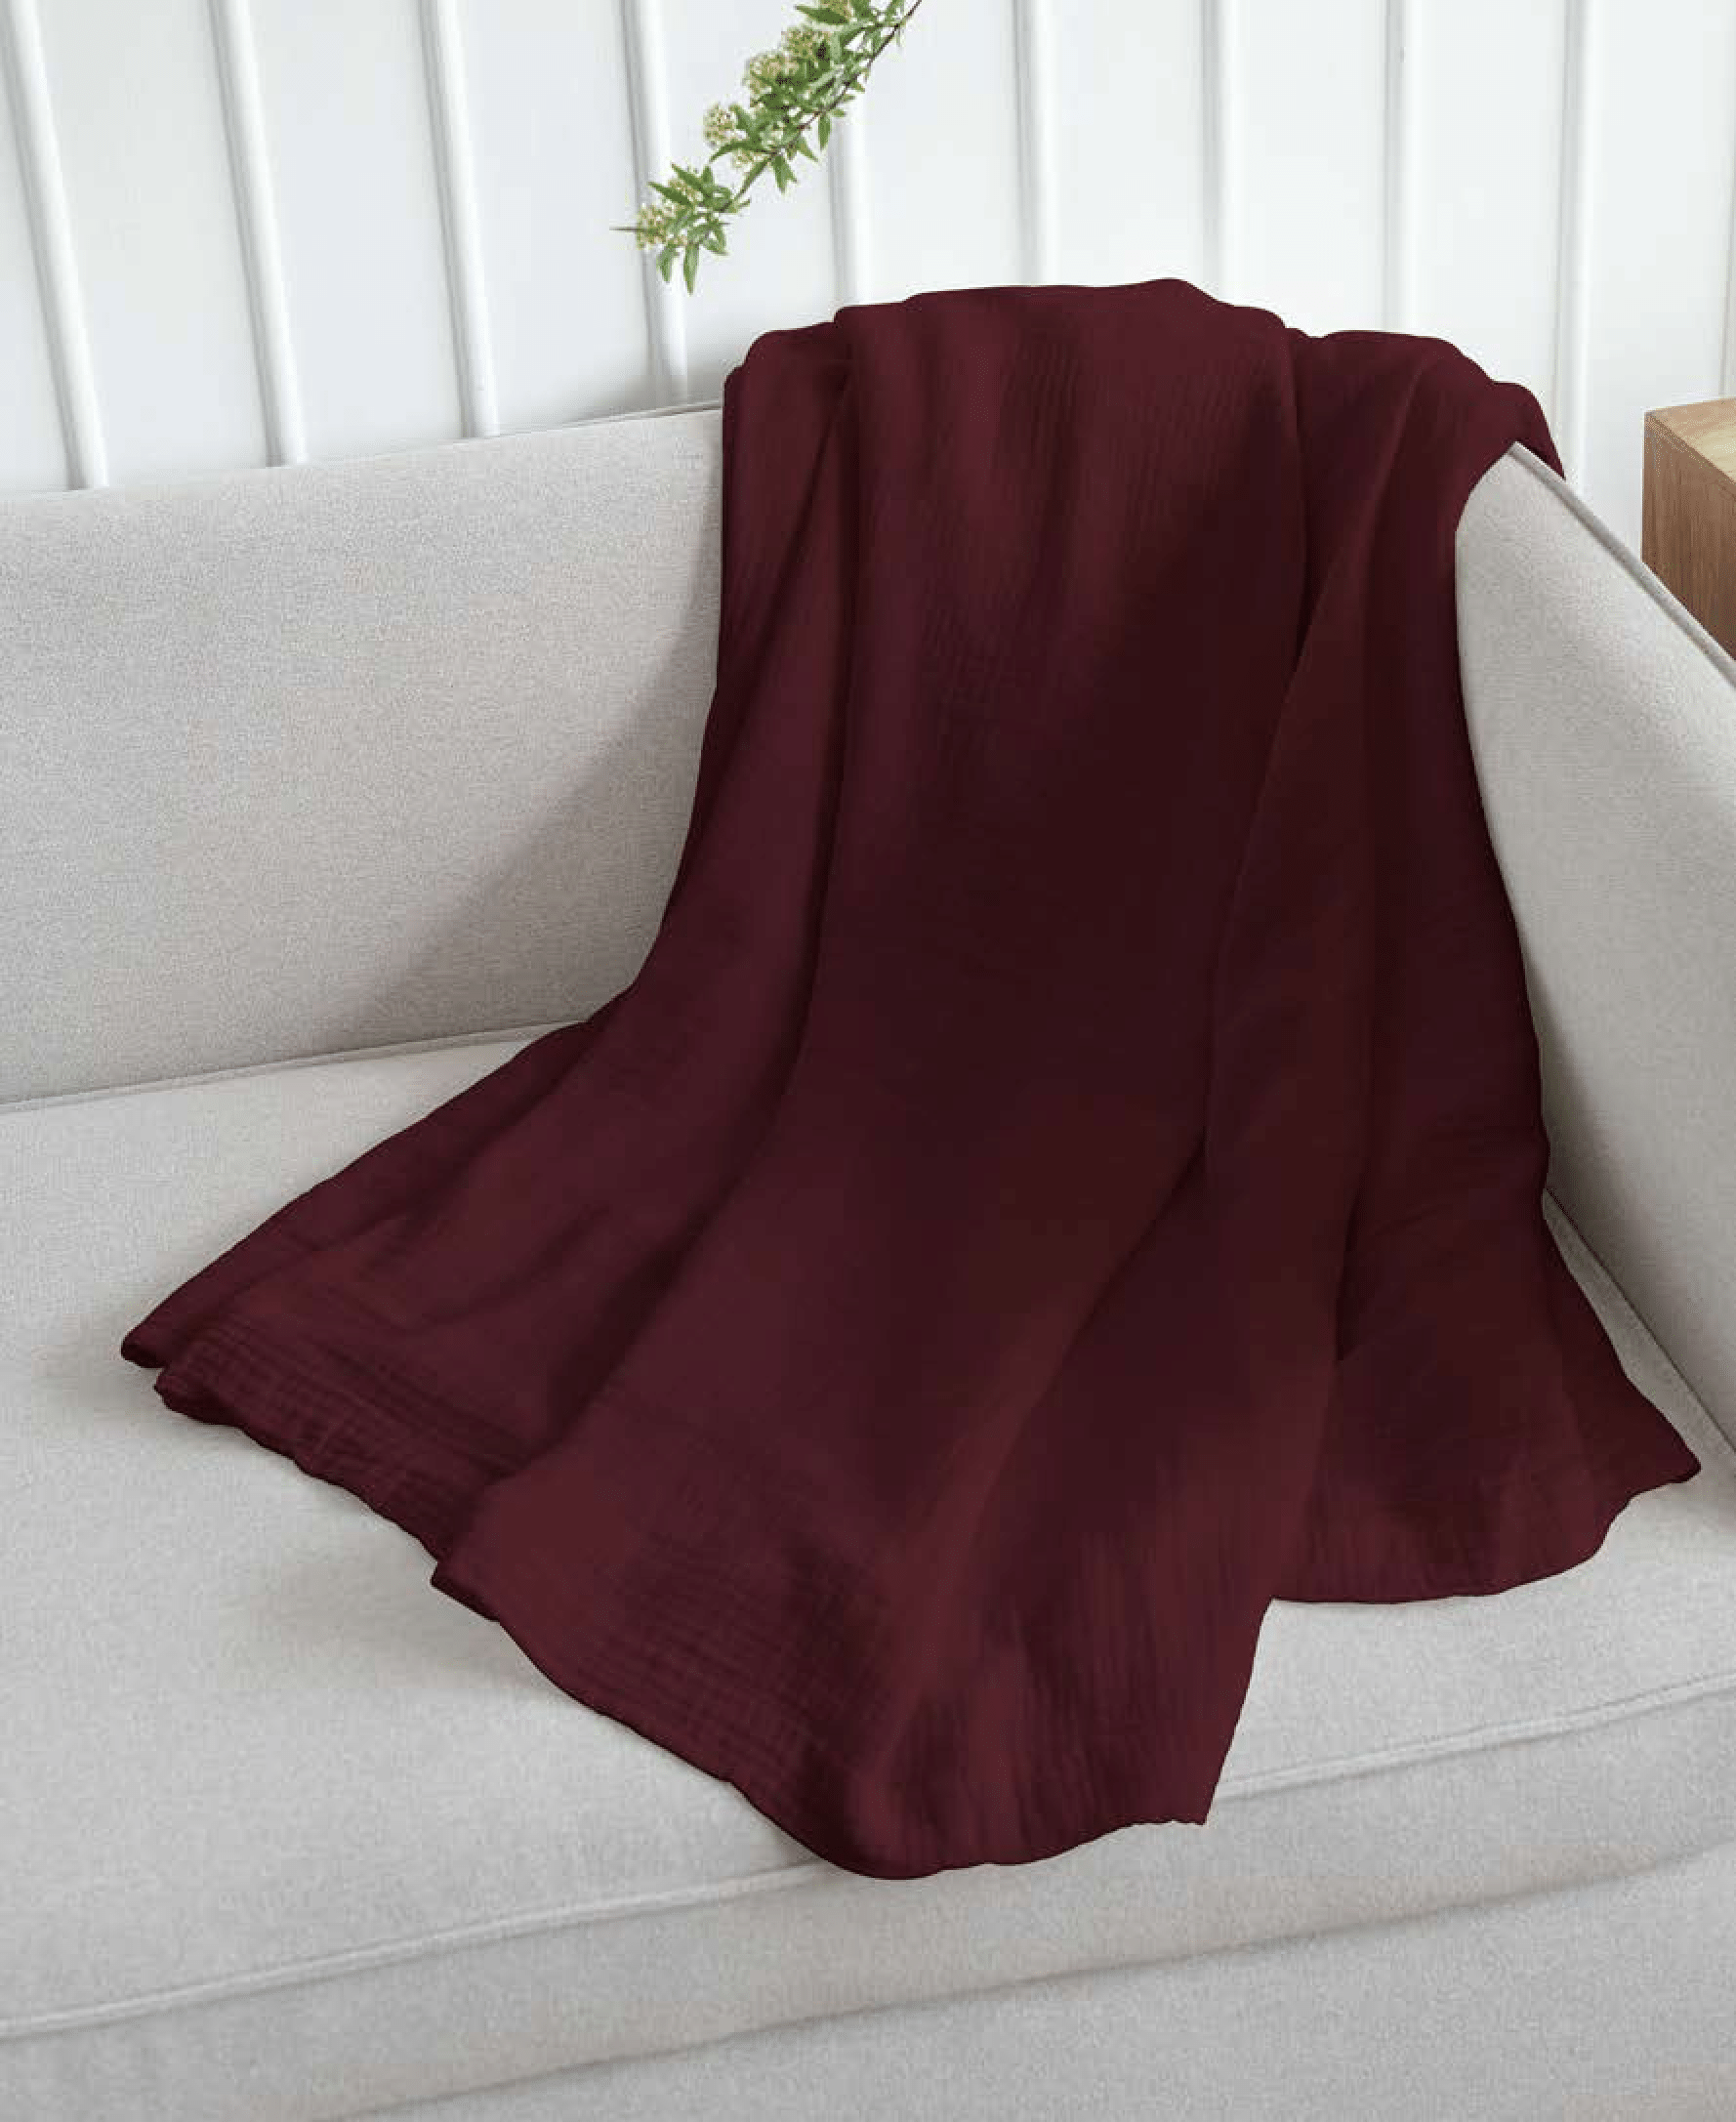 Burgundy Blanket/Throw